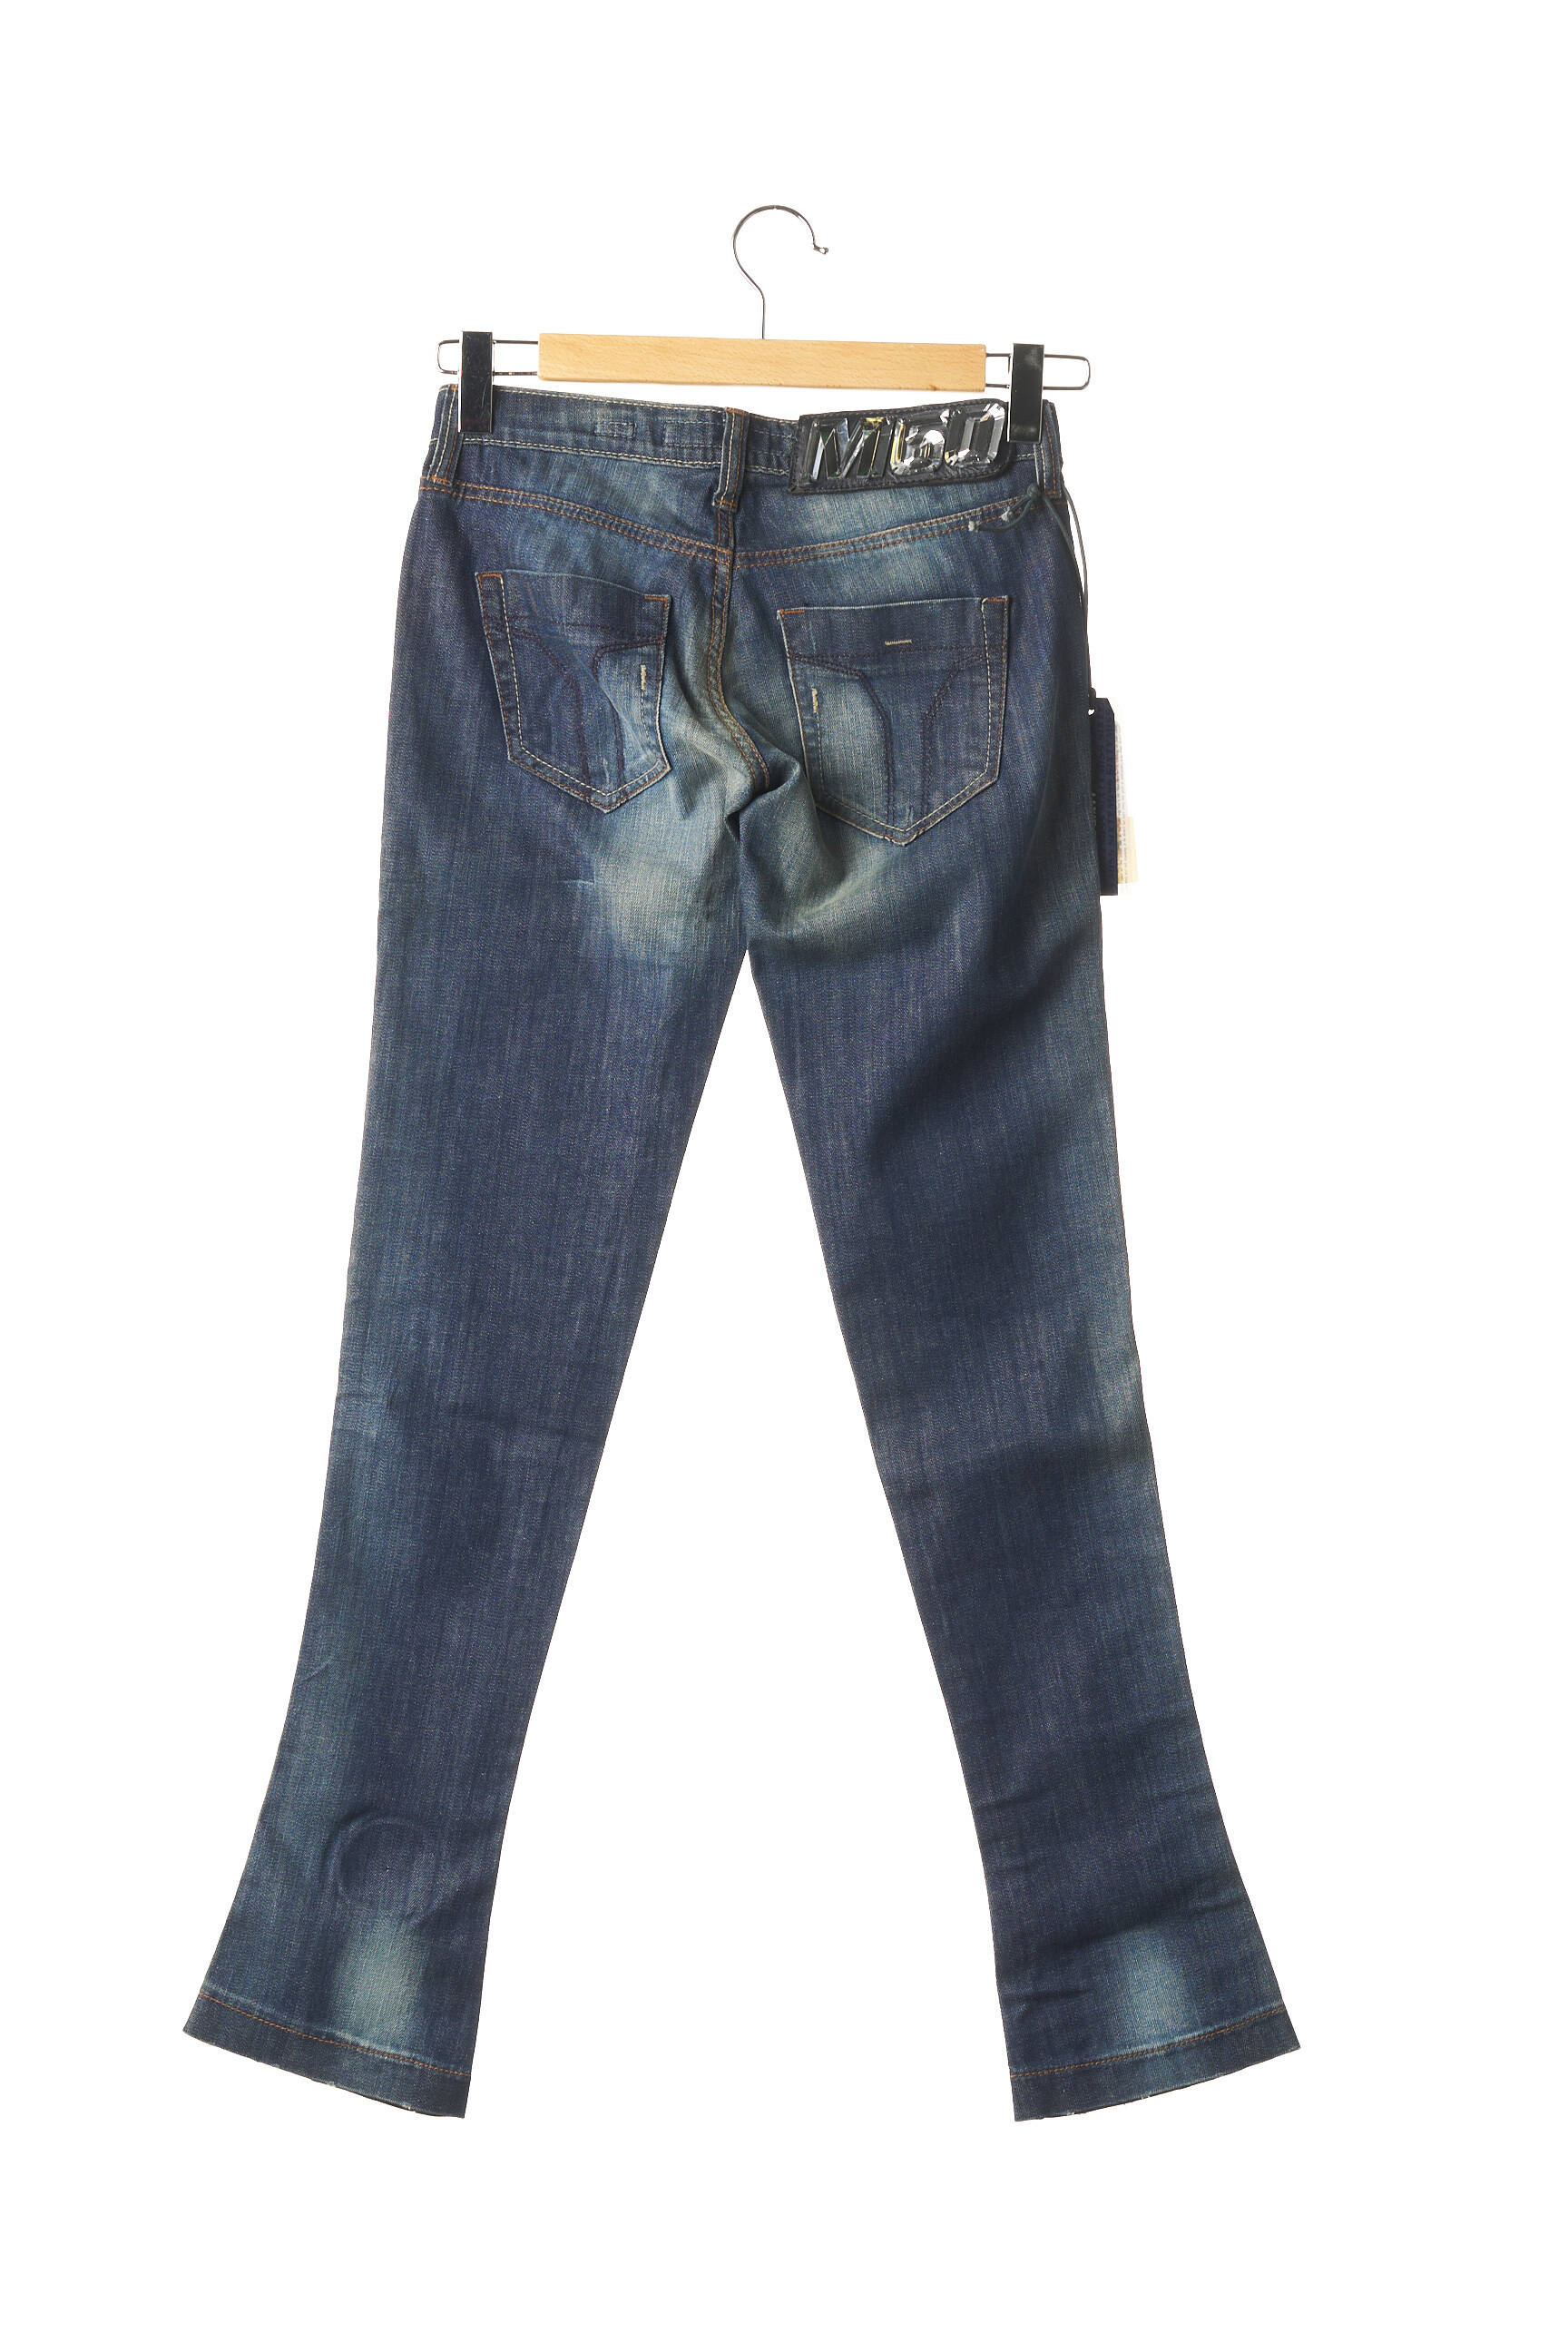 Miss Sixty Jeans bootcut bleu fonc\u00e9-marron clair Mode Jeans Jeans bootcut 